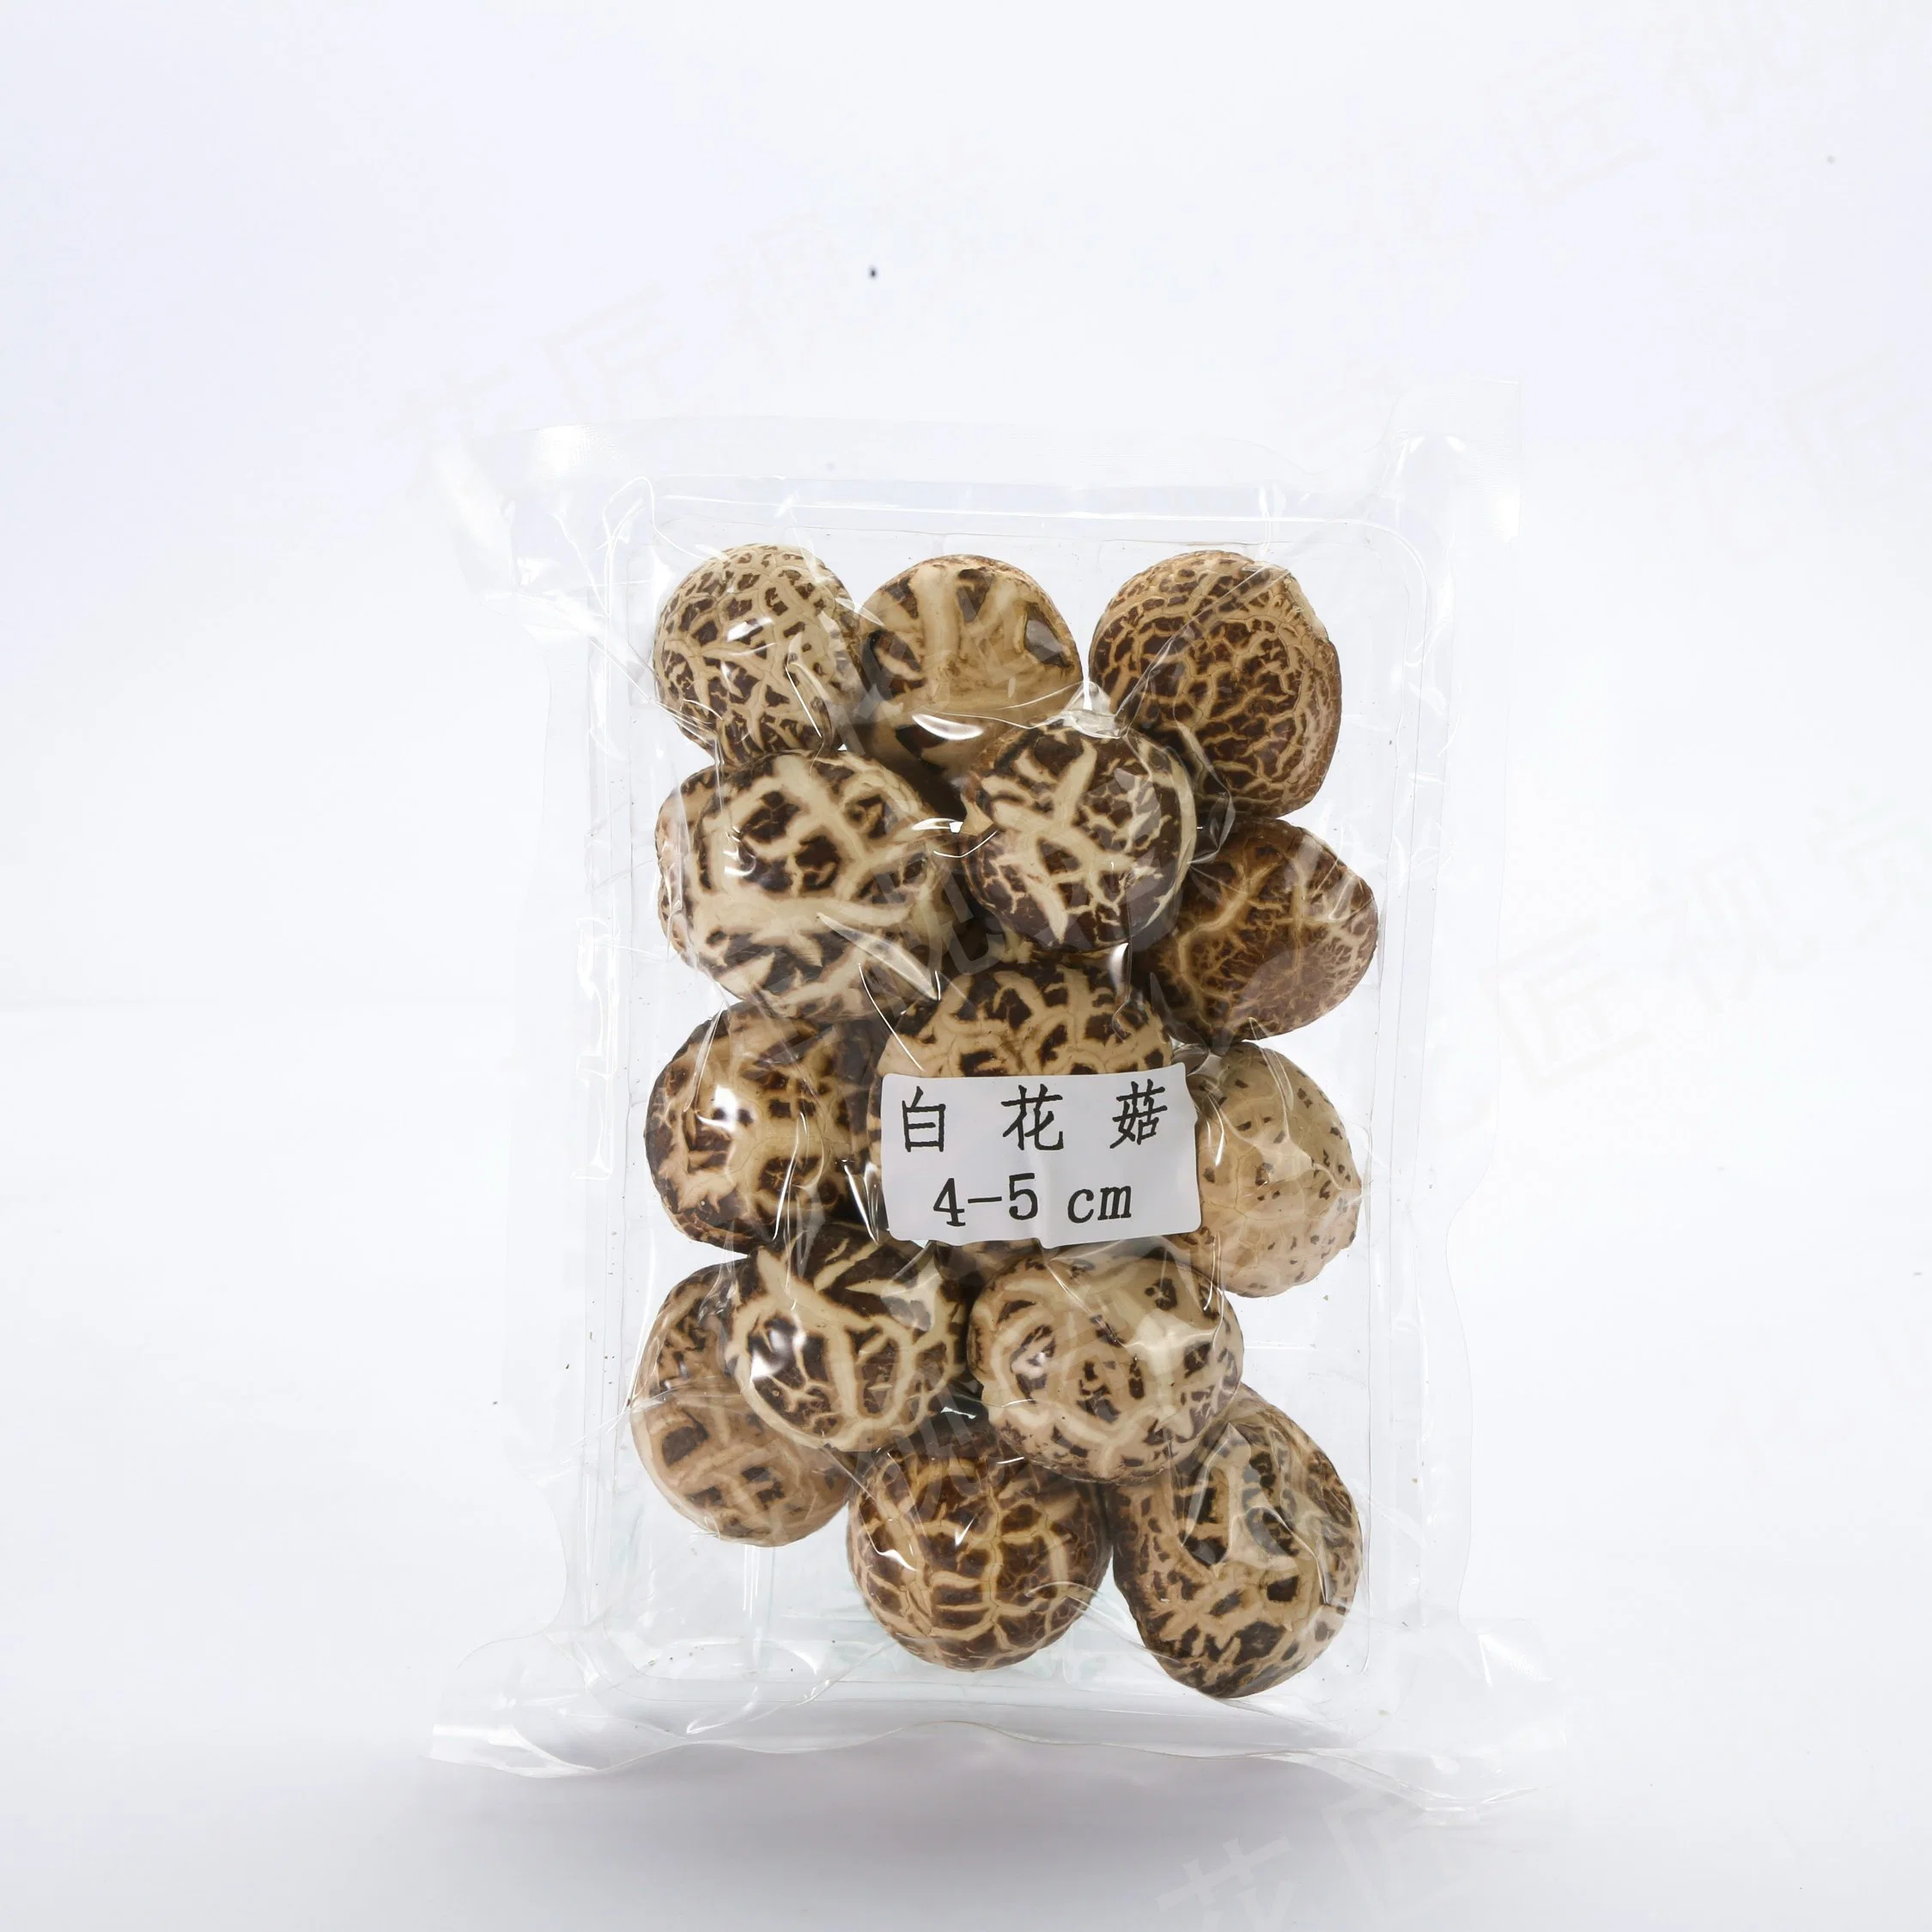 High Health Value Sliced Dehydrated Mushroom for Sale